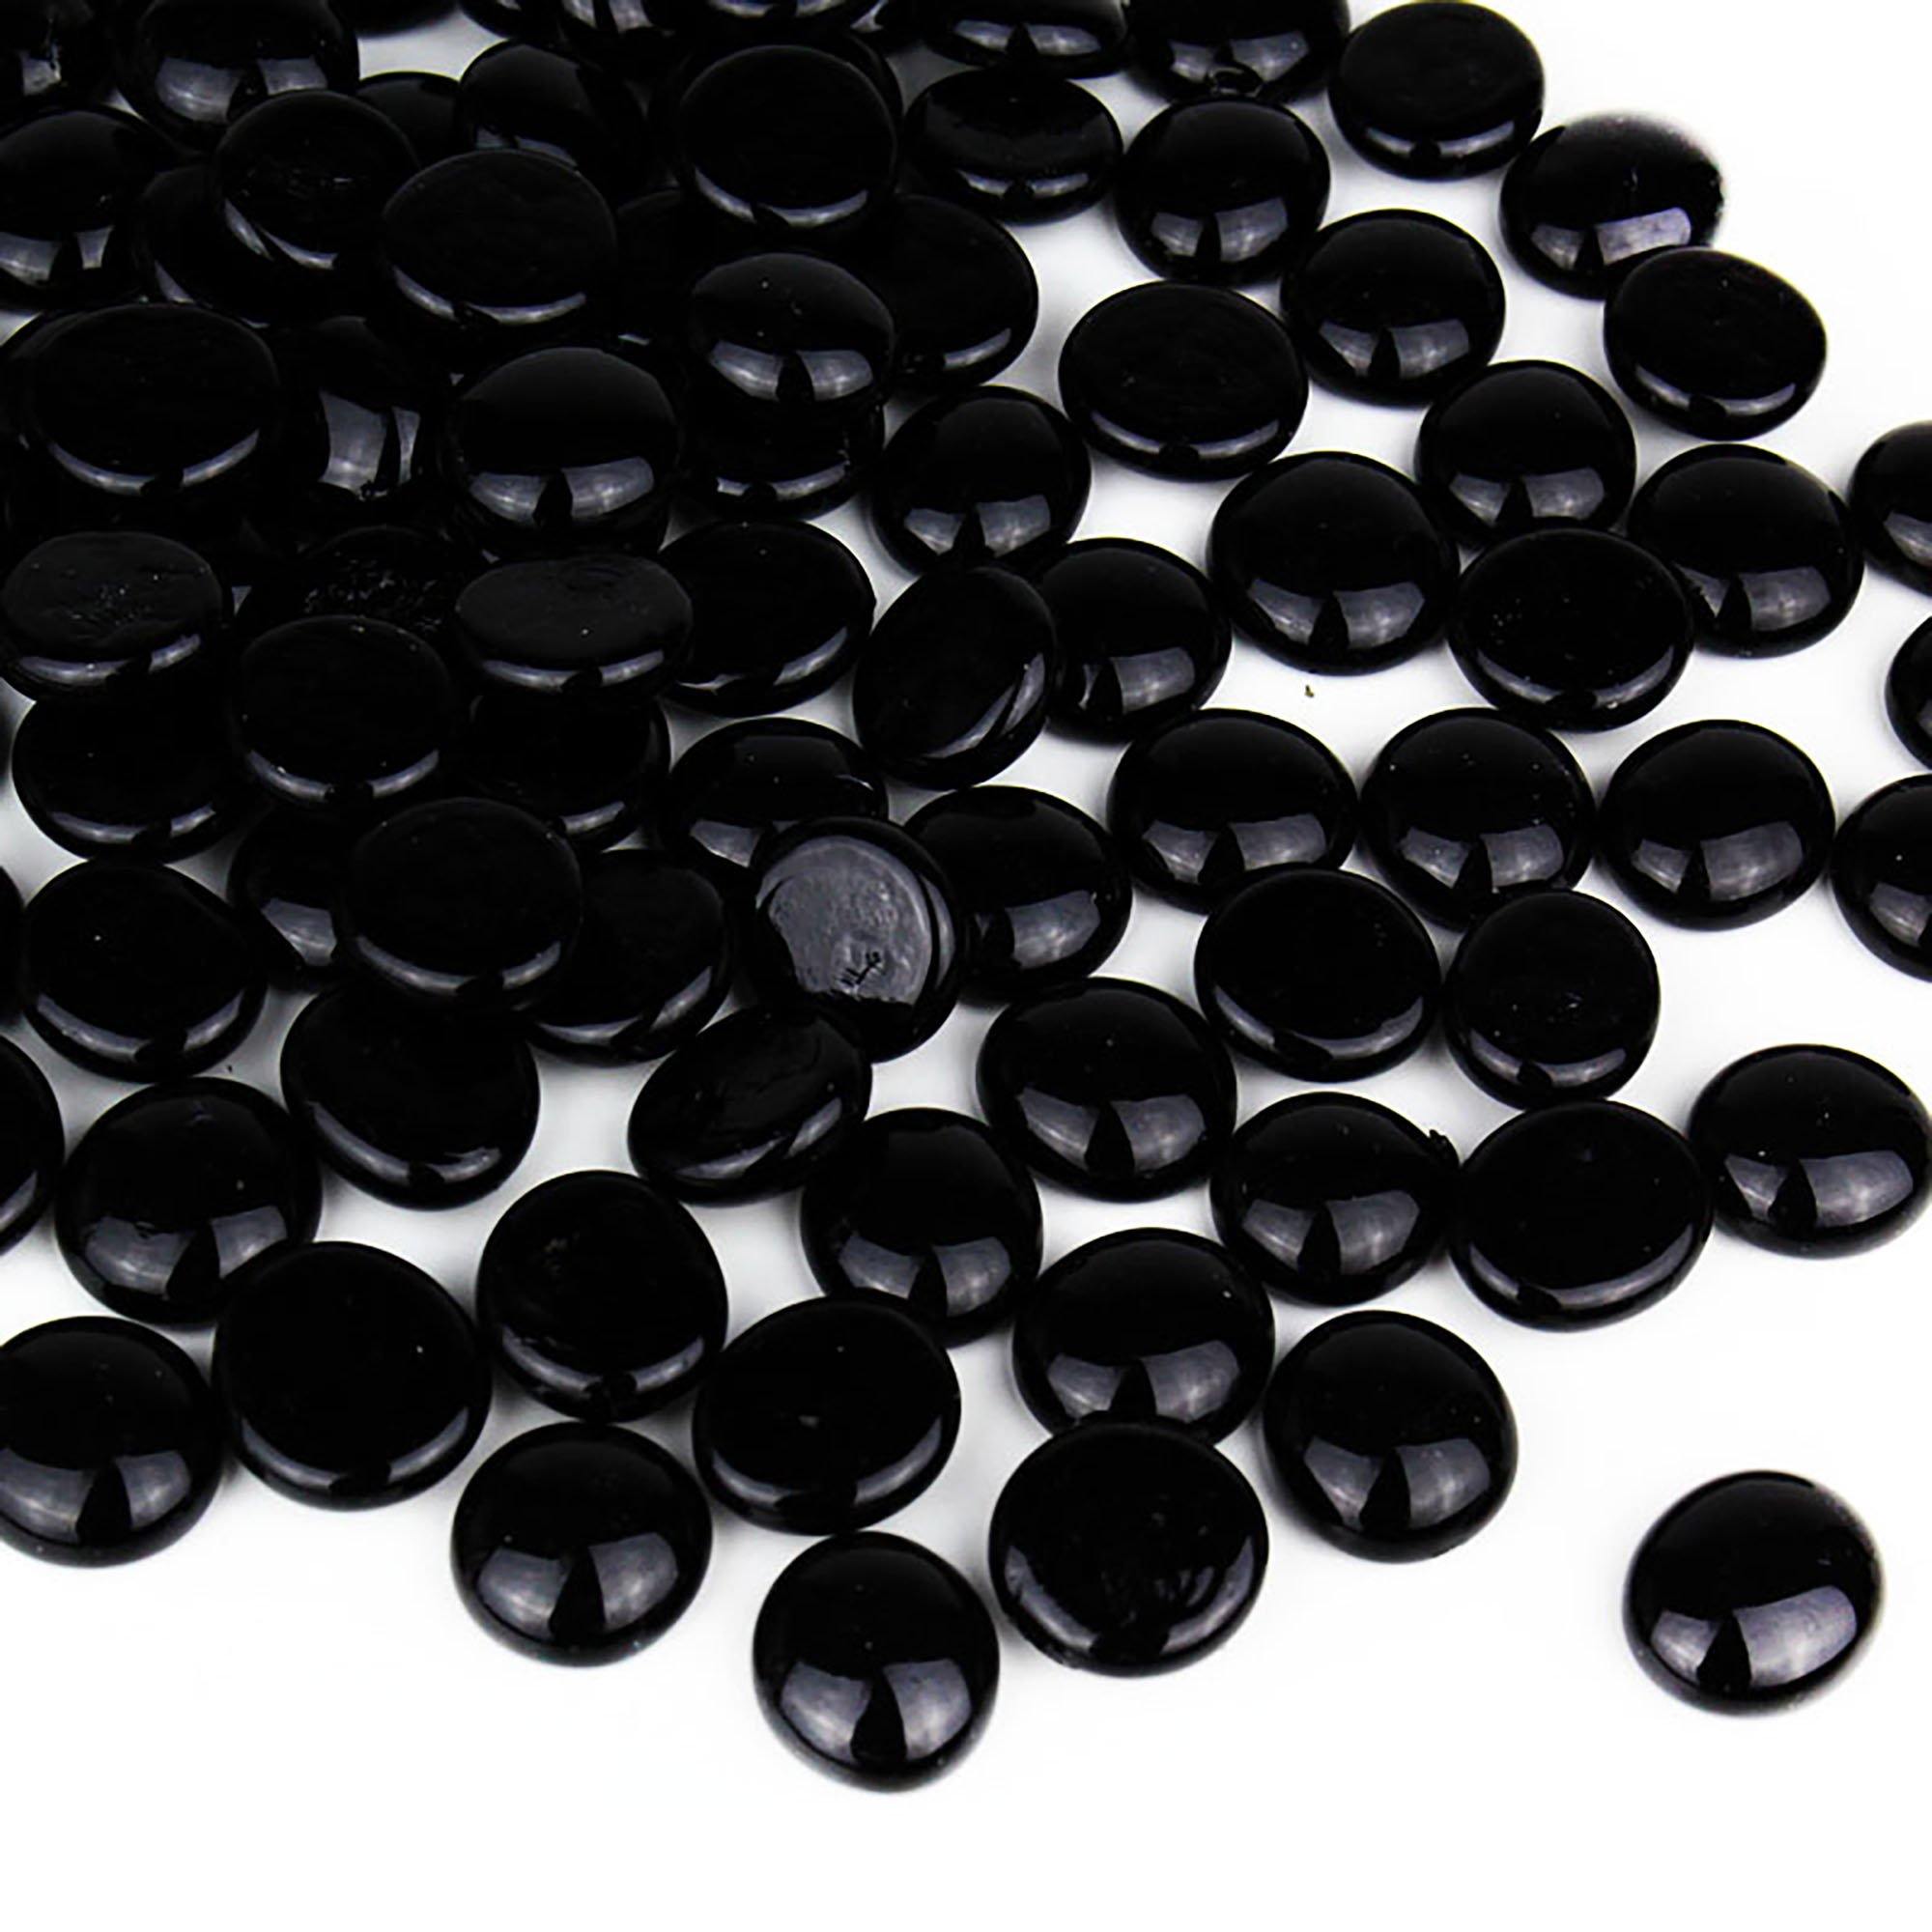 Koltose by Mash - Flat Glass Marbles, Black Accent Gems, Decorative Vase  Filler Stones, 2 lbs 